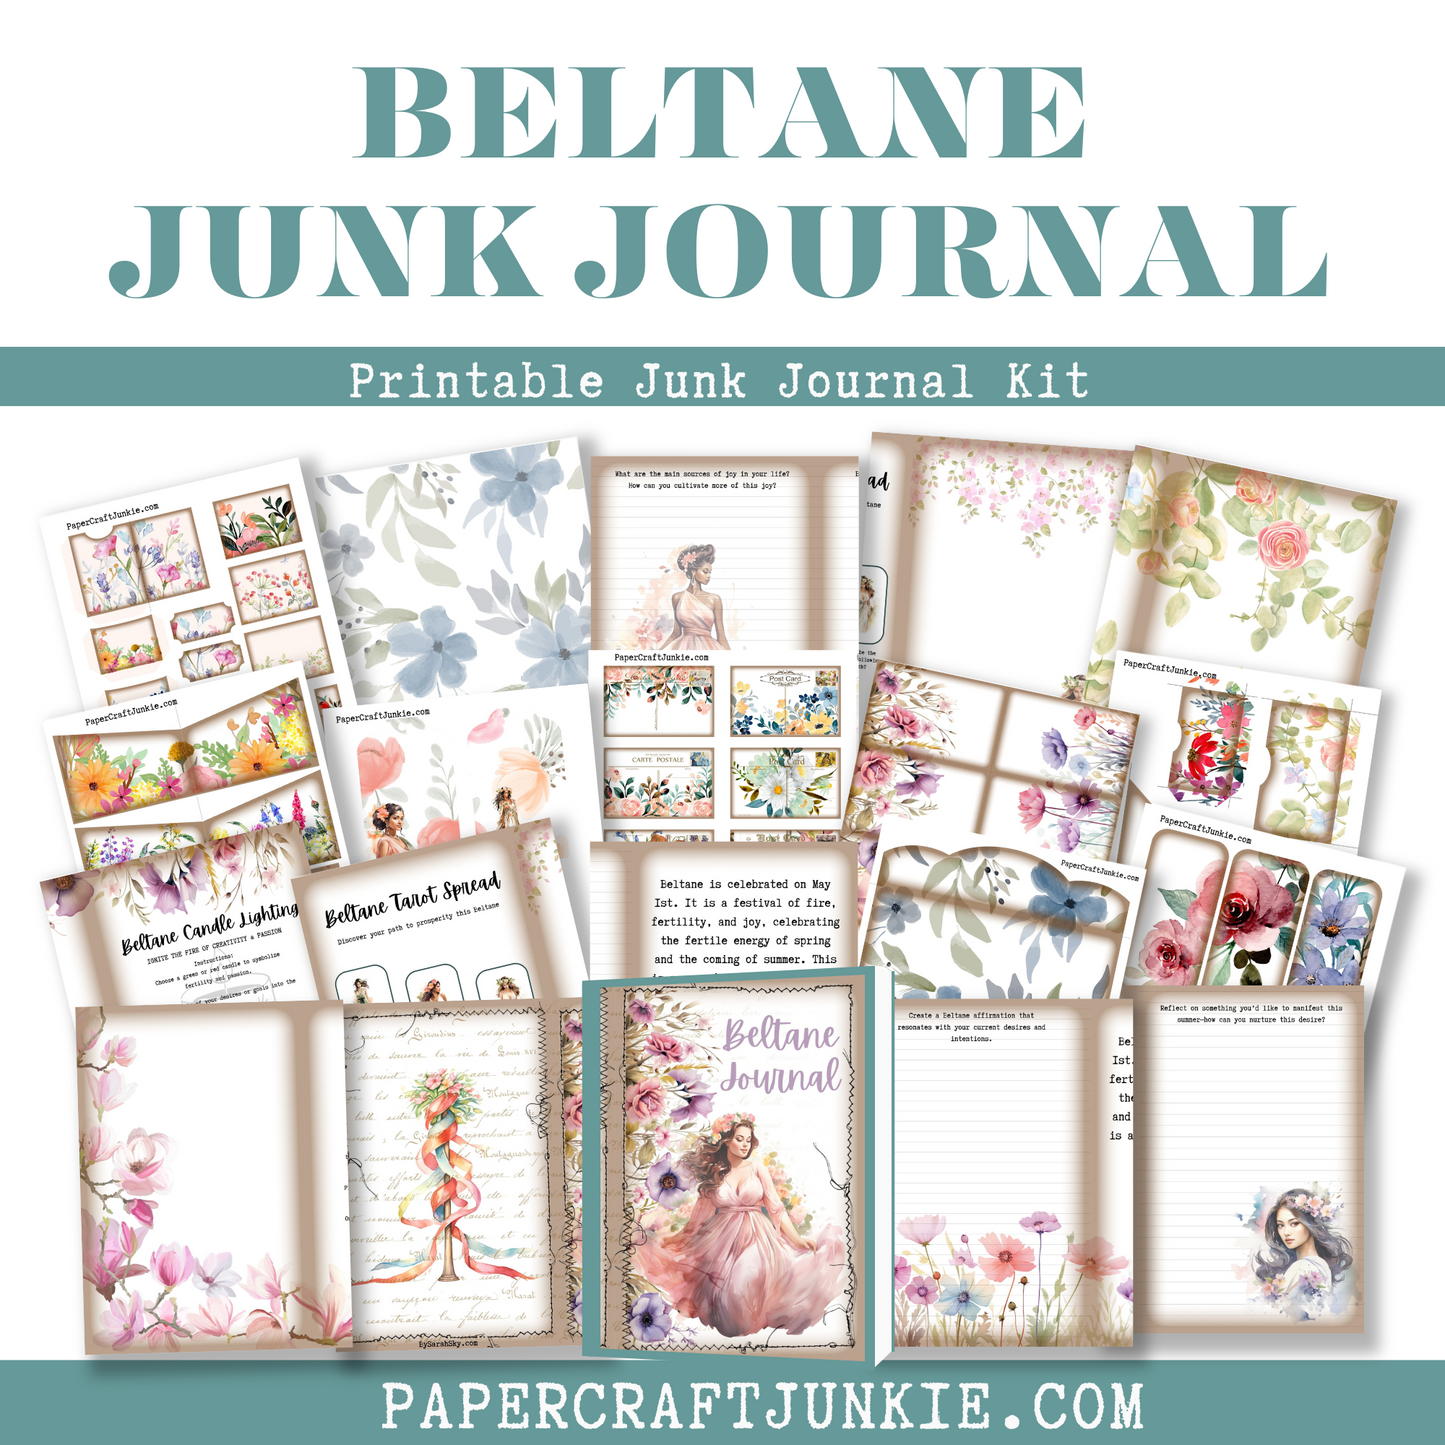 Beltane Junk Journal Printable Kit - Digital Product